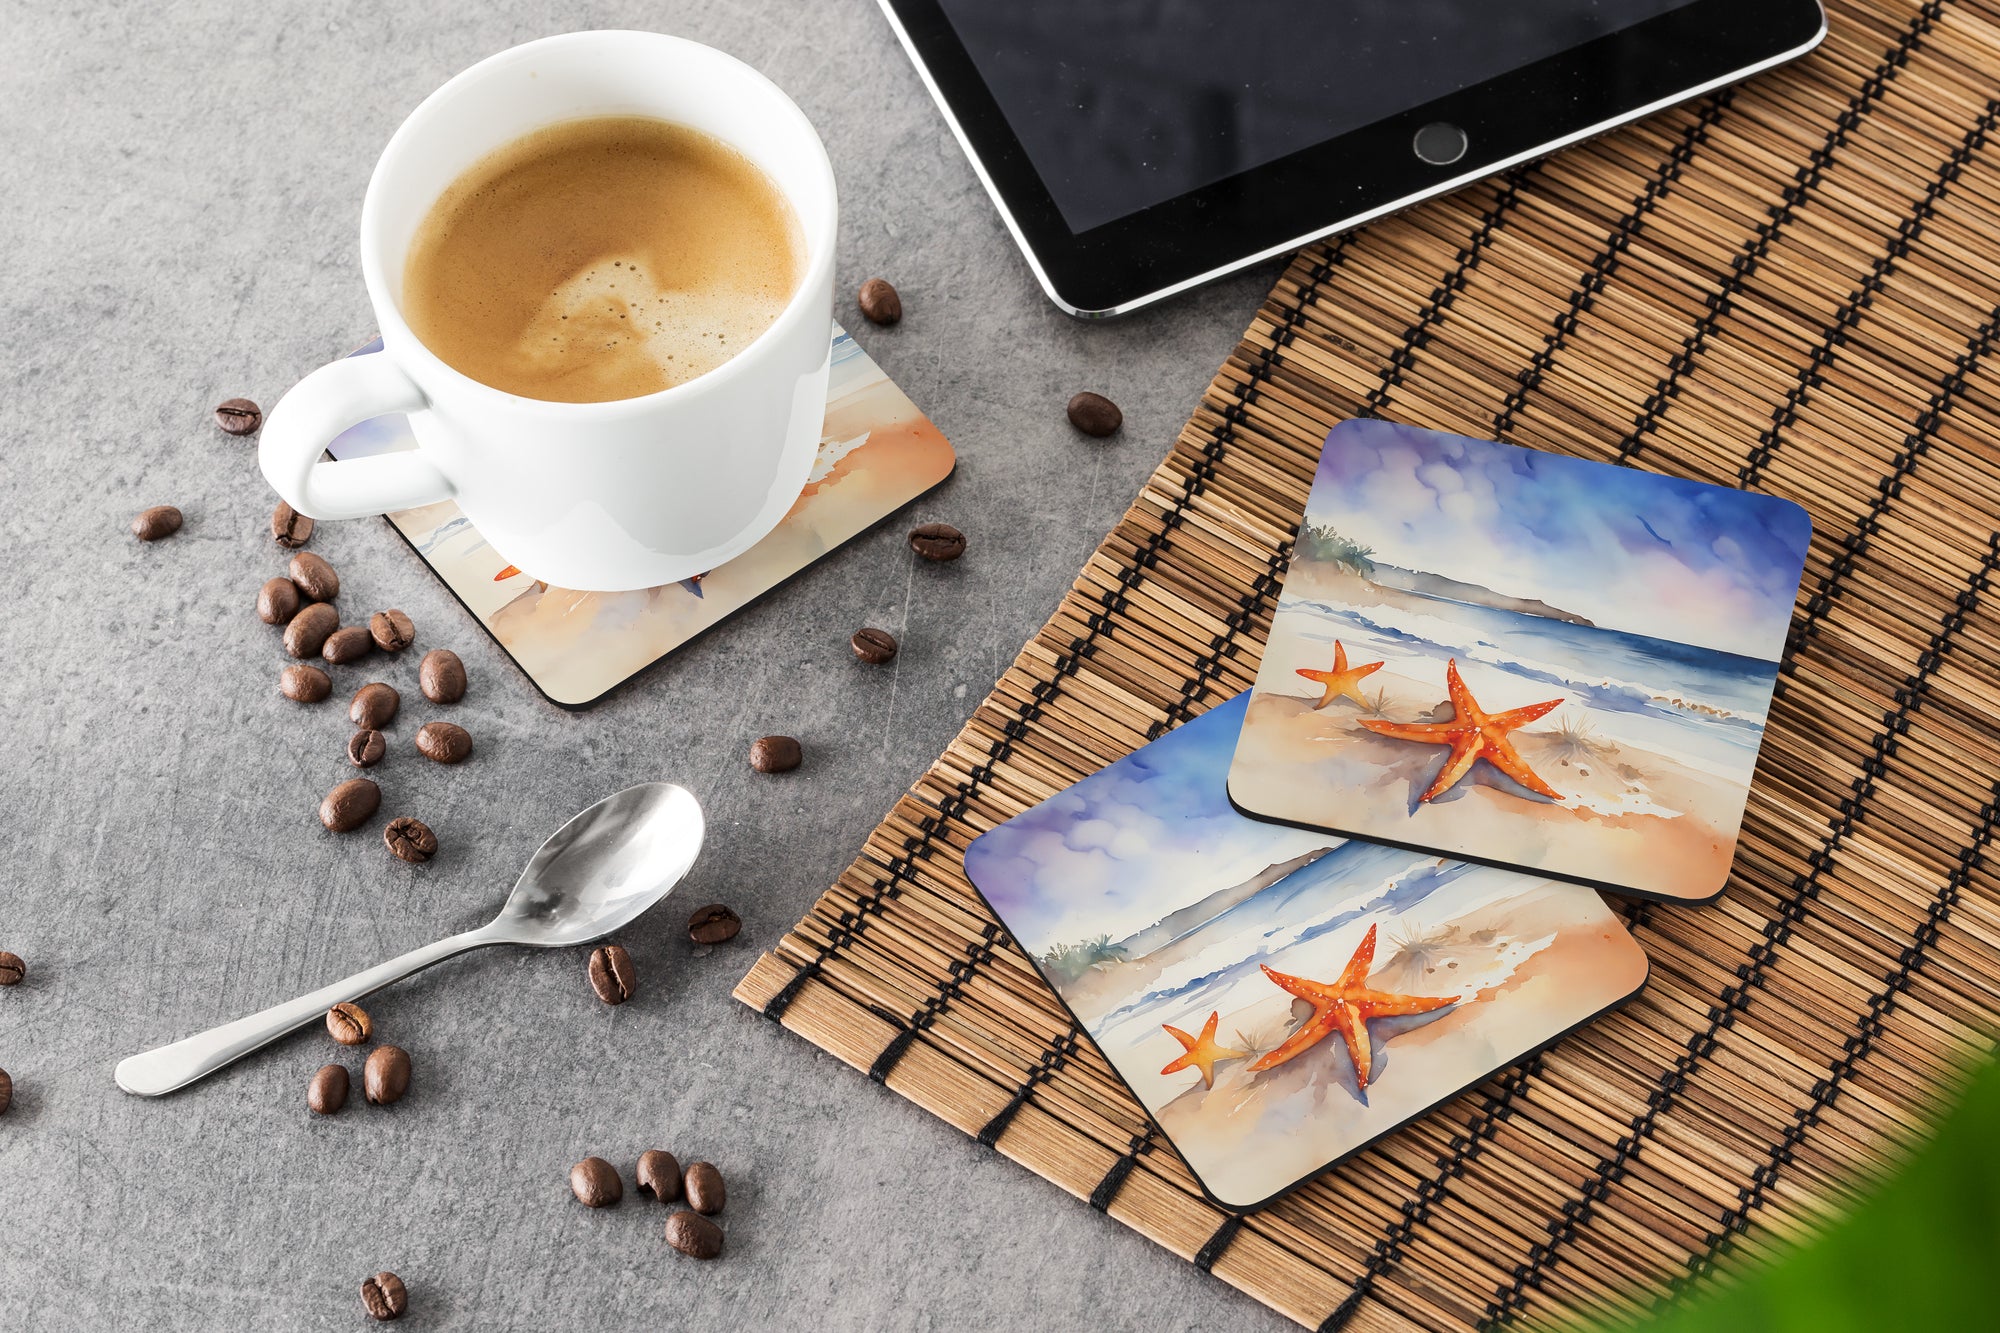 Starfish Foam Coasters